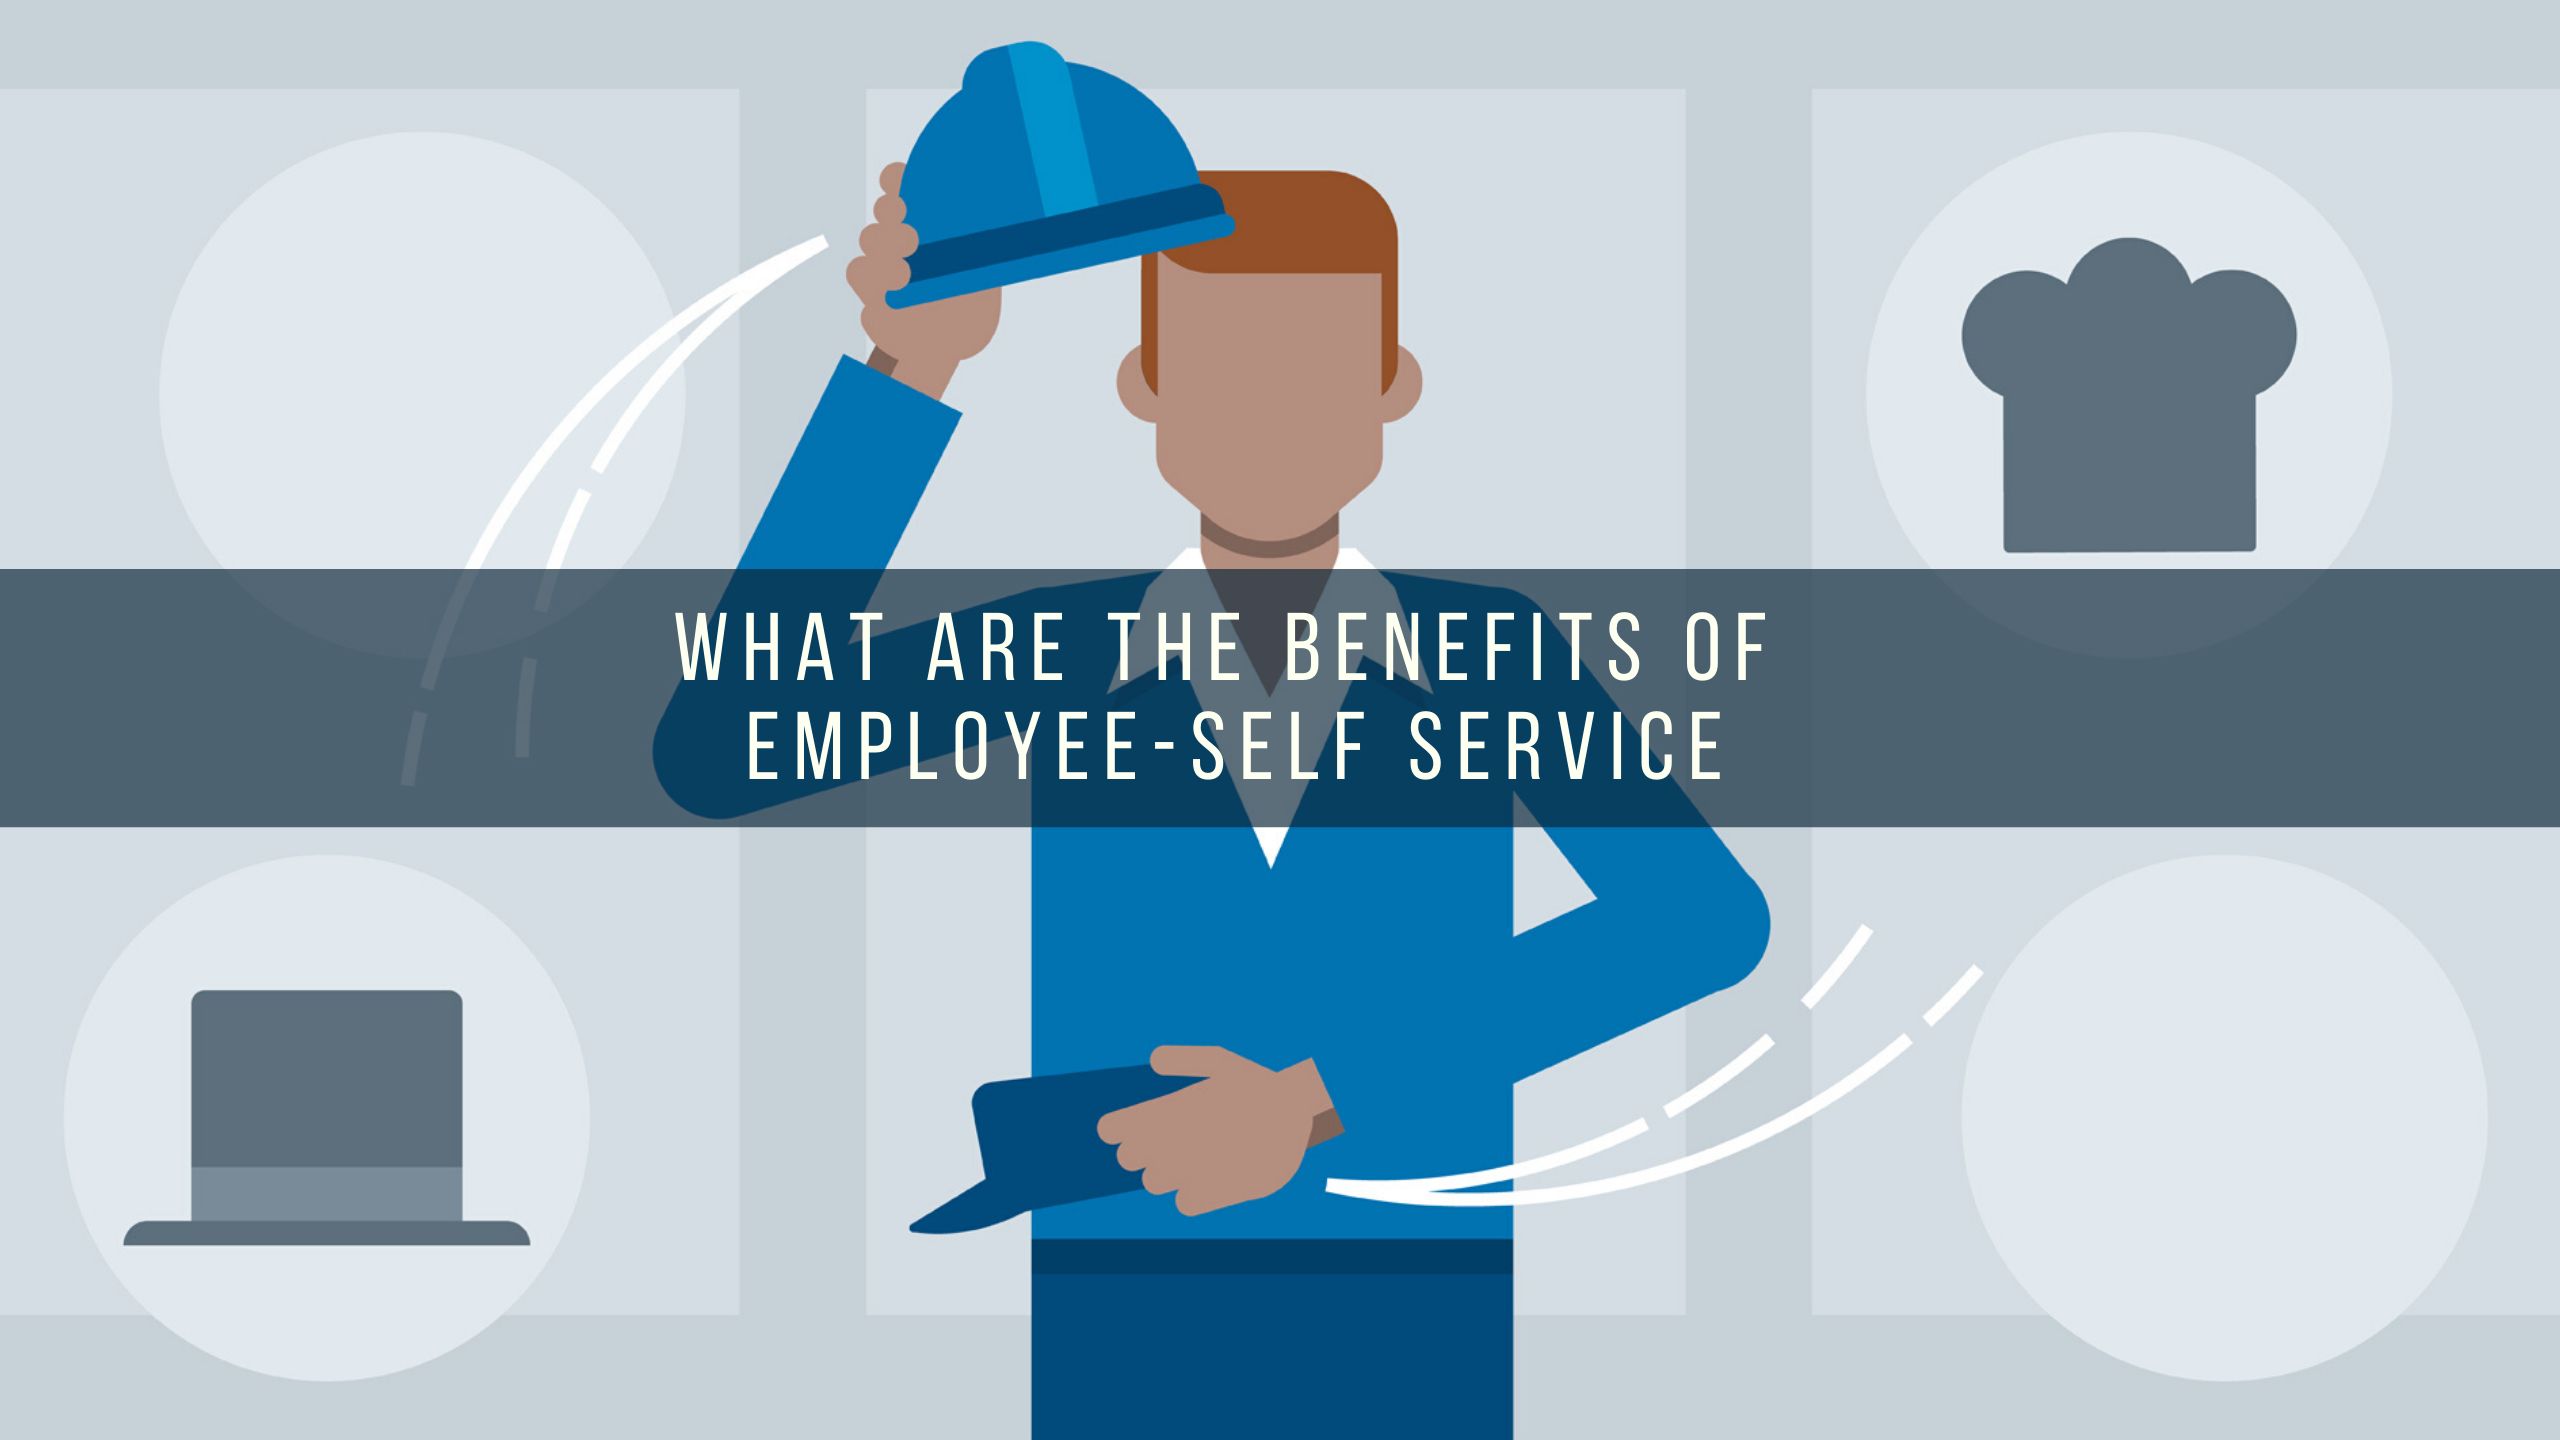 Benefits of Employee-Self Service